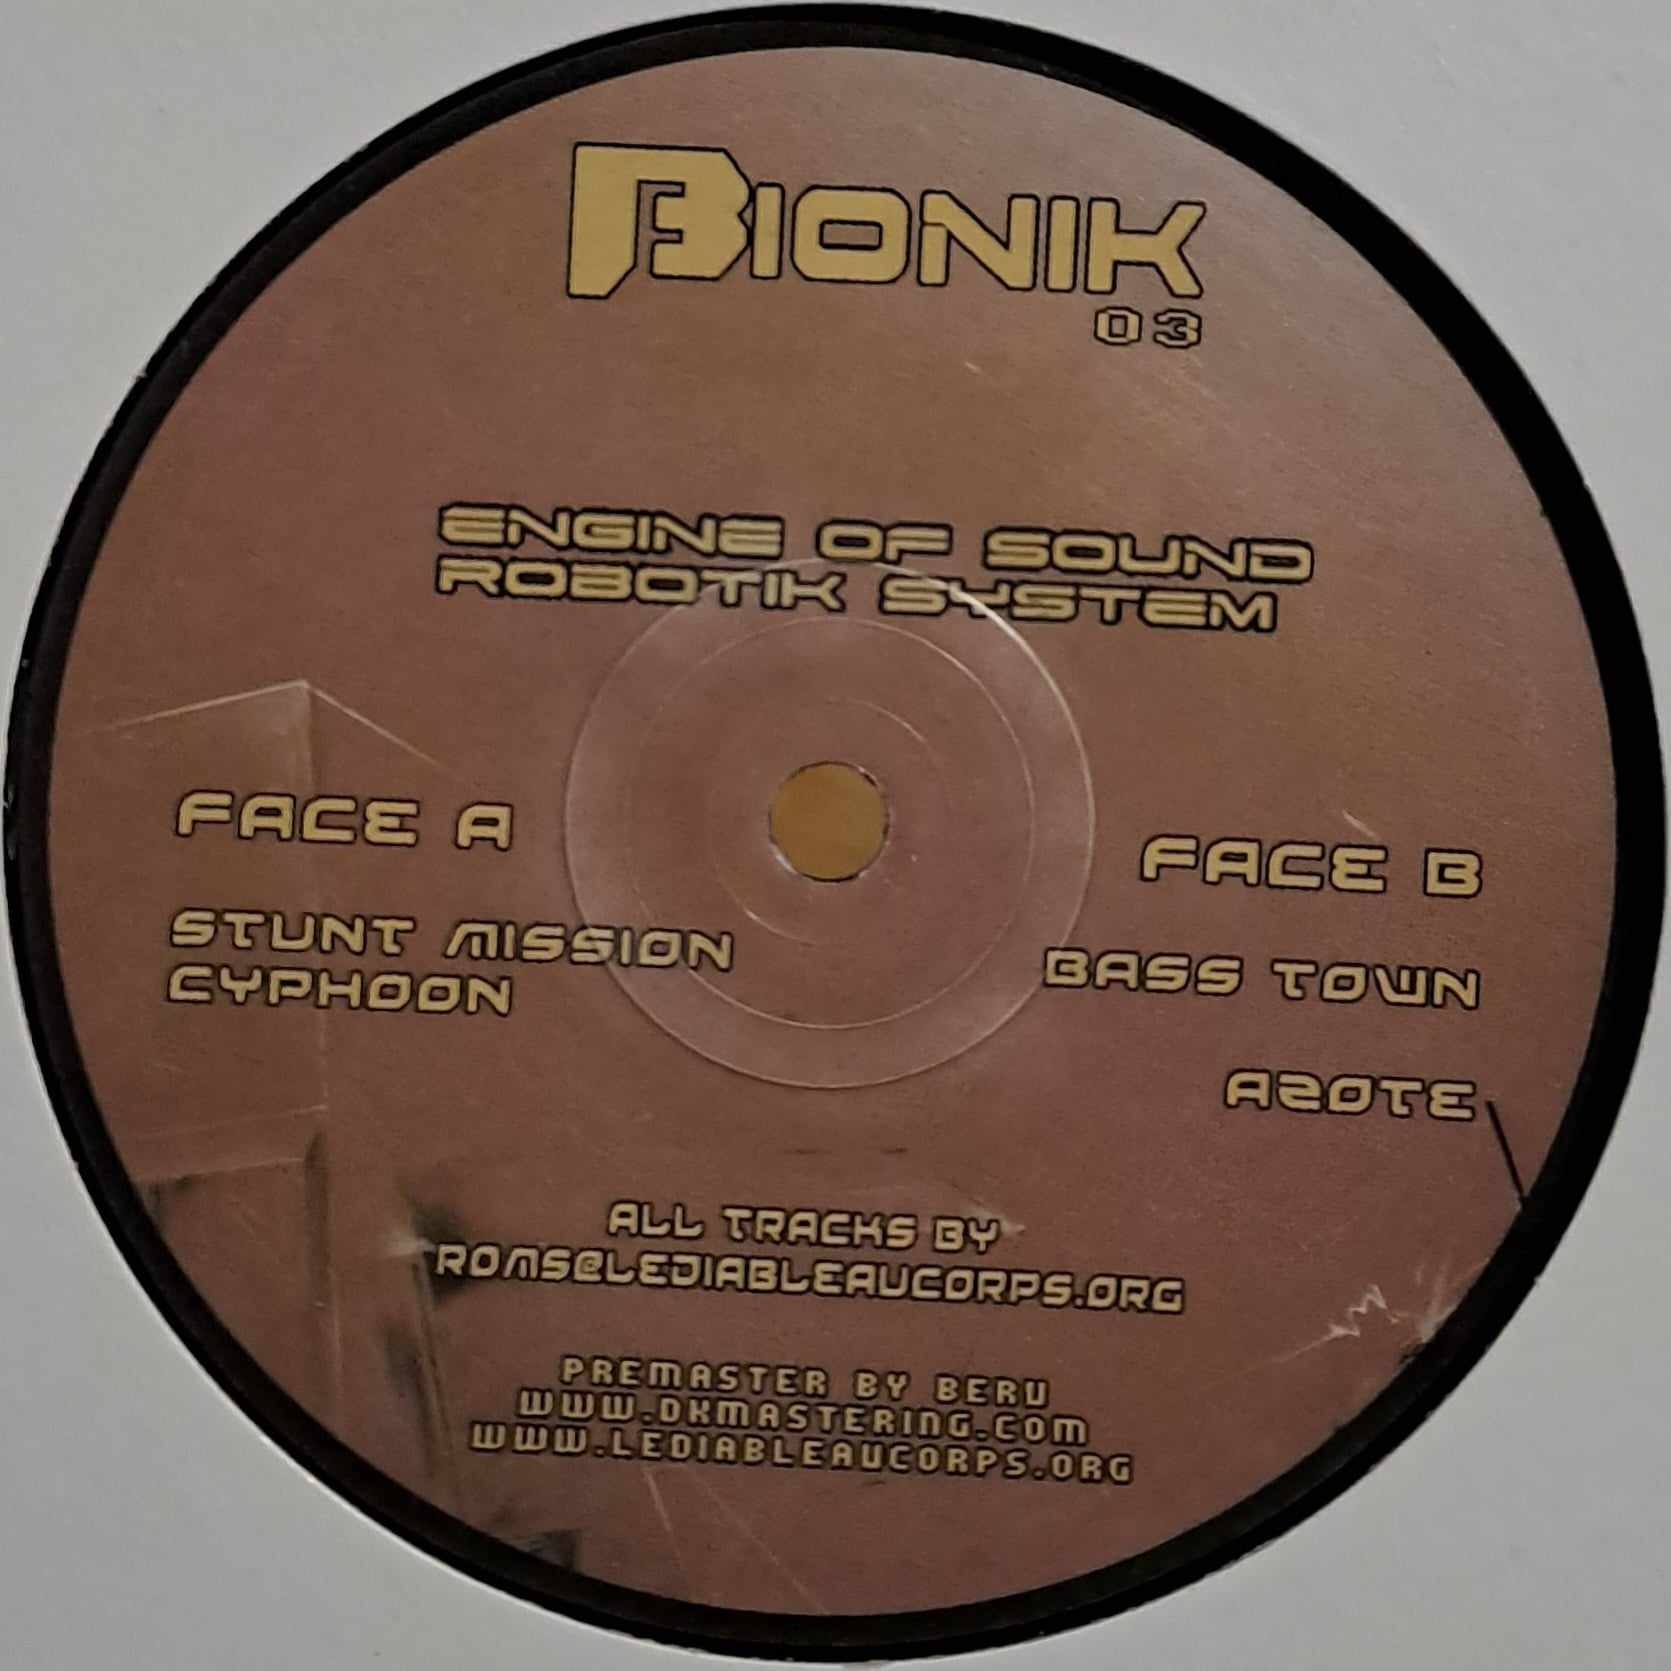 Bionik 03 - vinyle freetekno